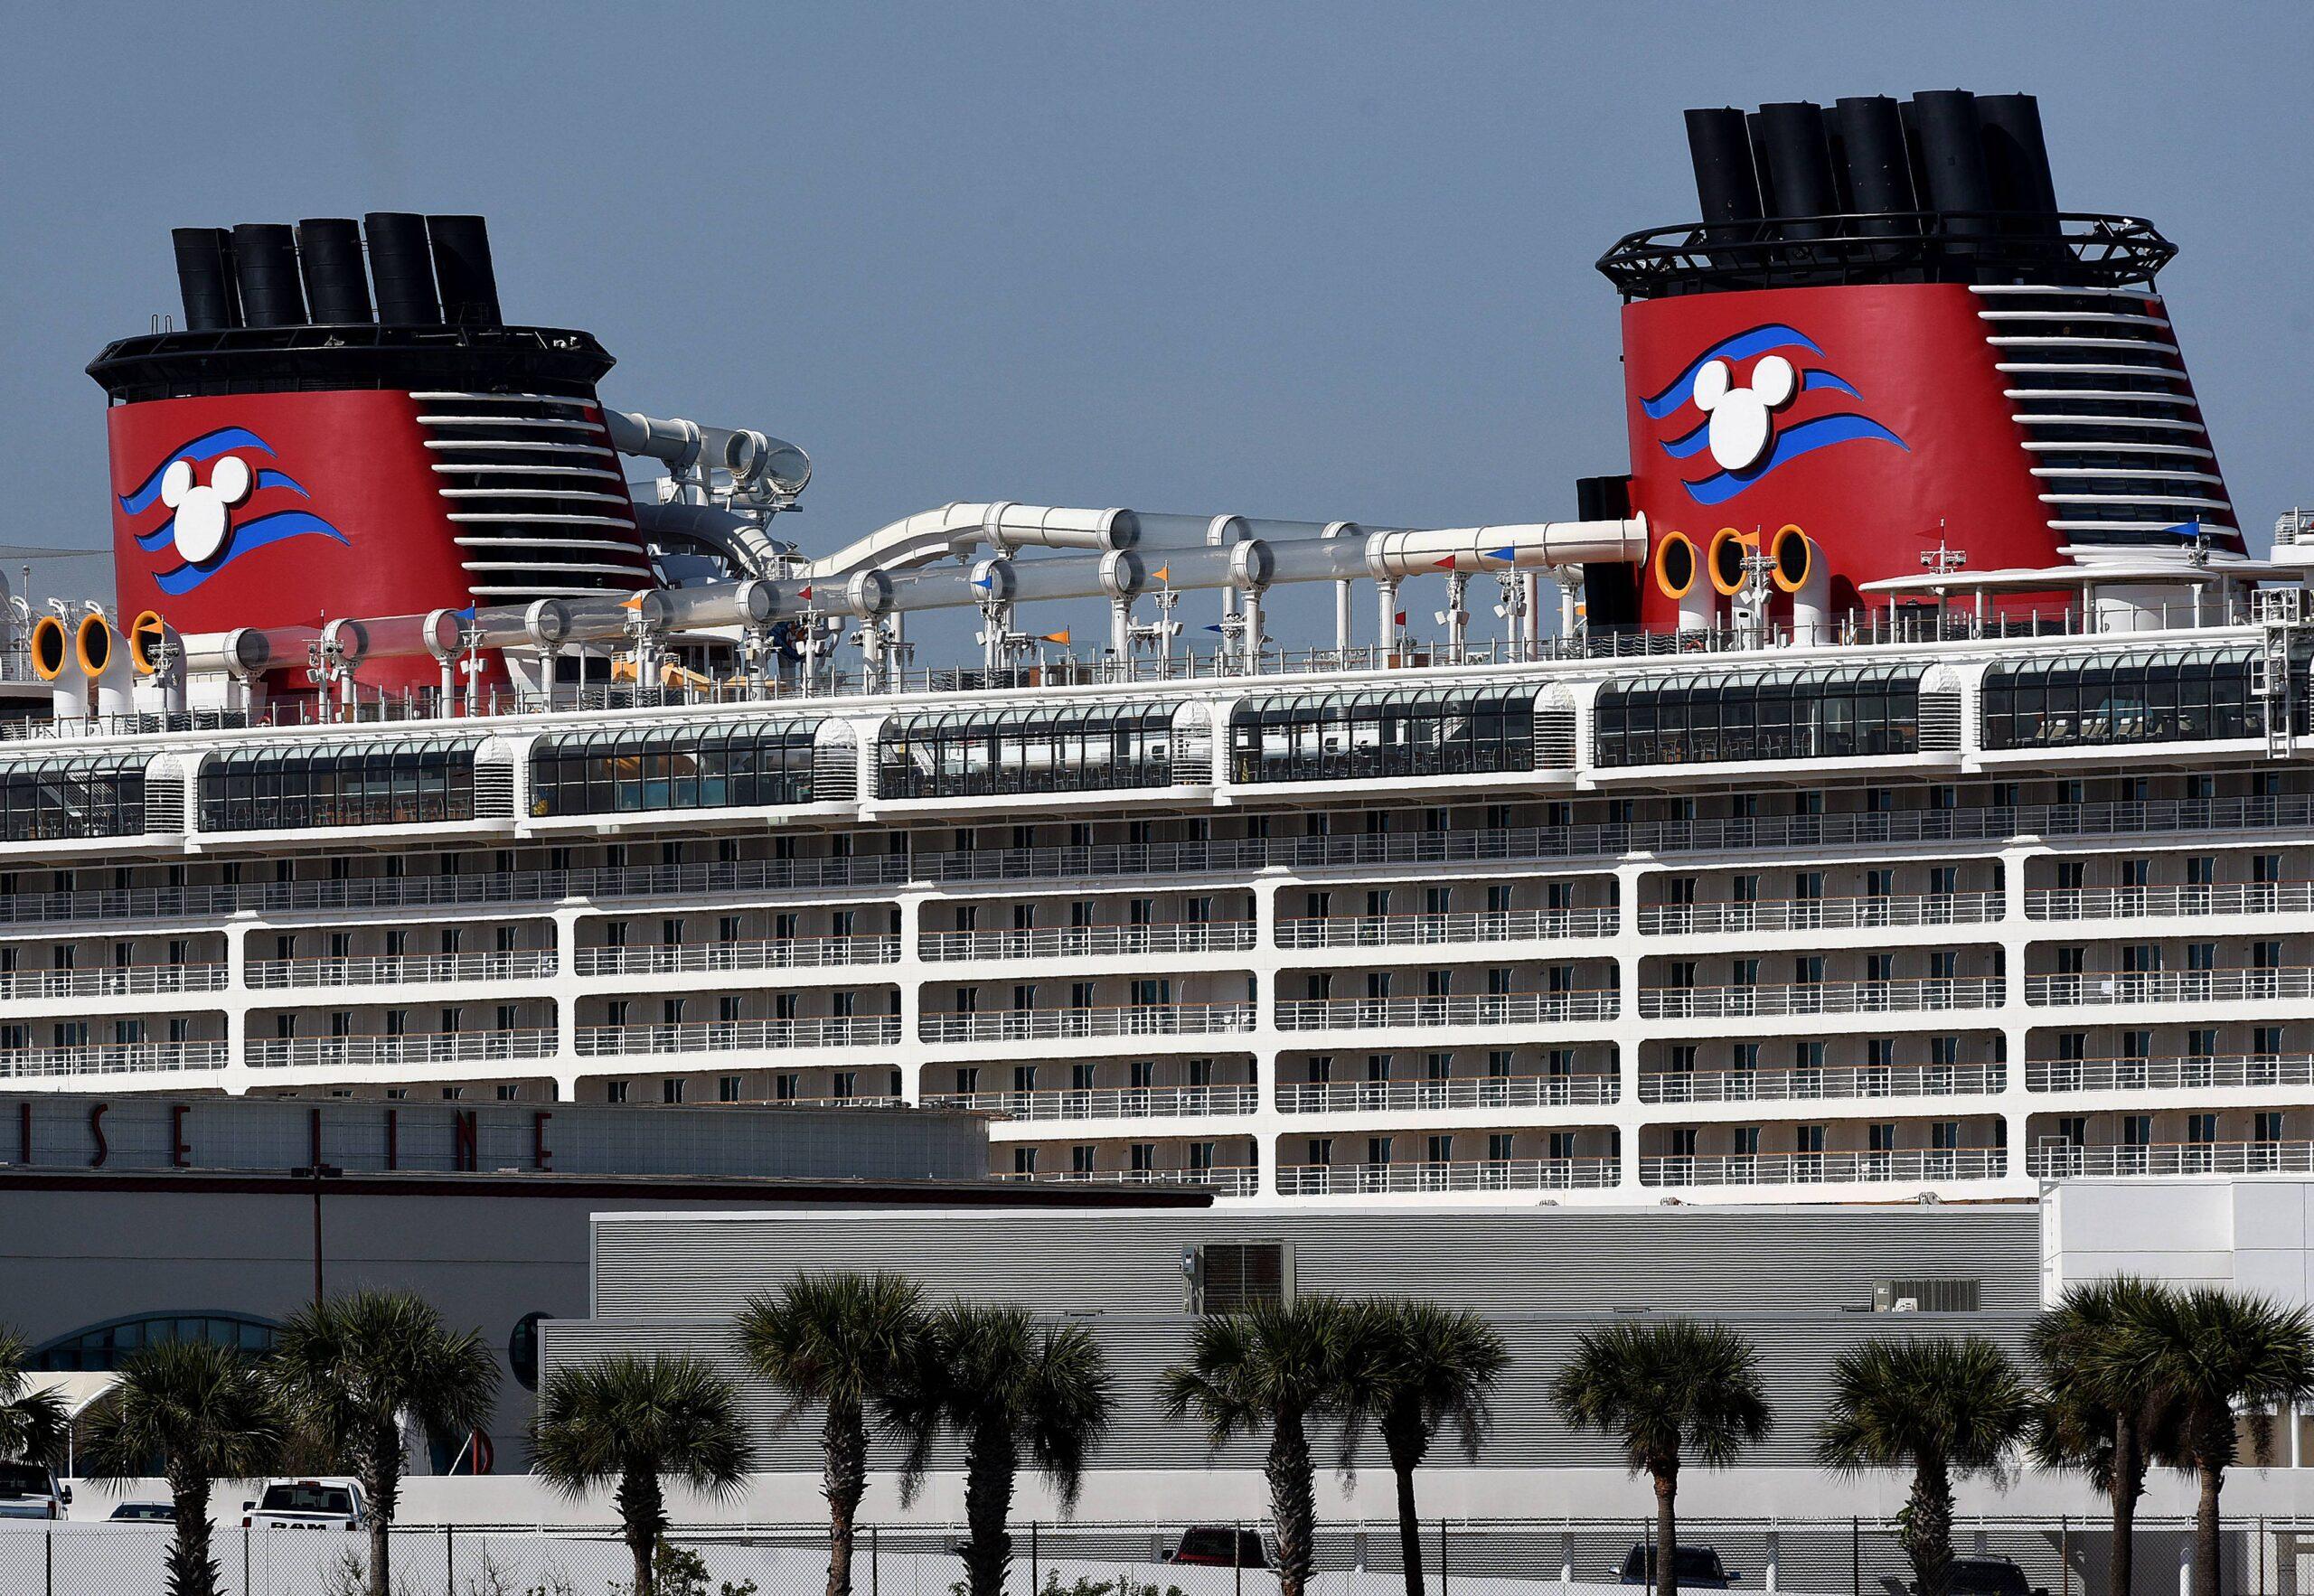 Disney Dream docked in Florida